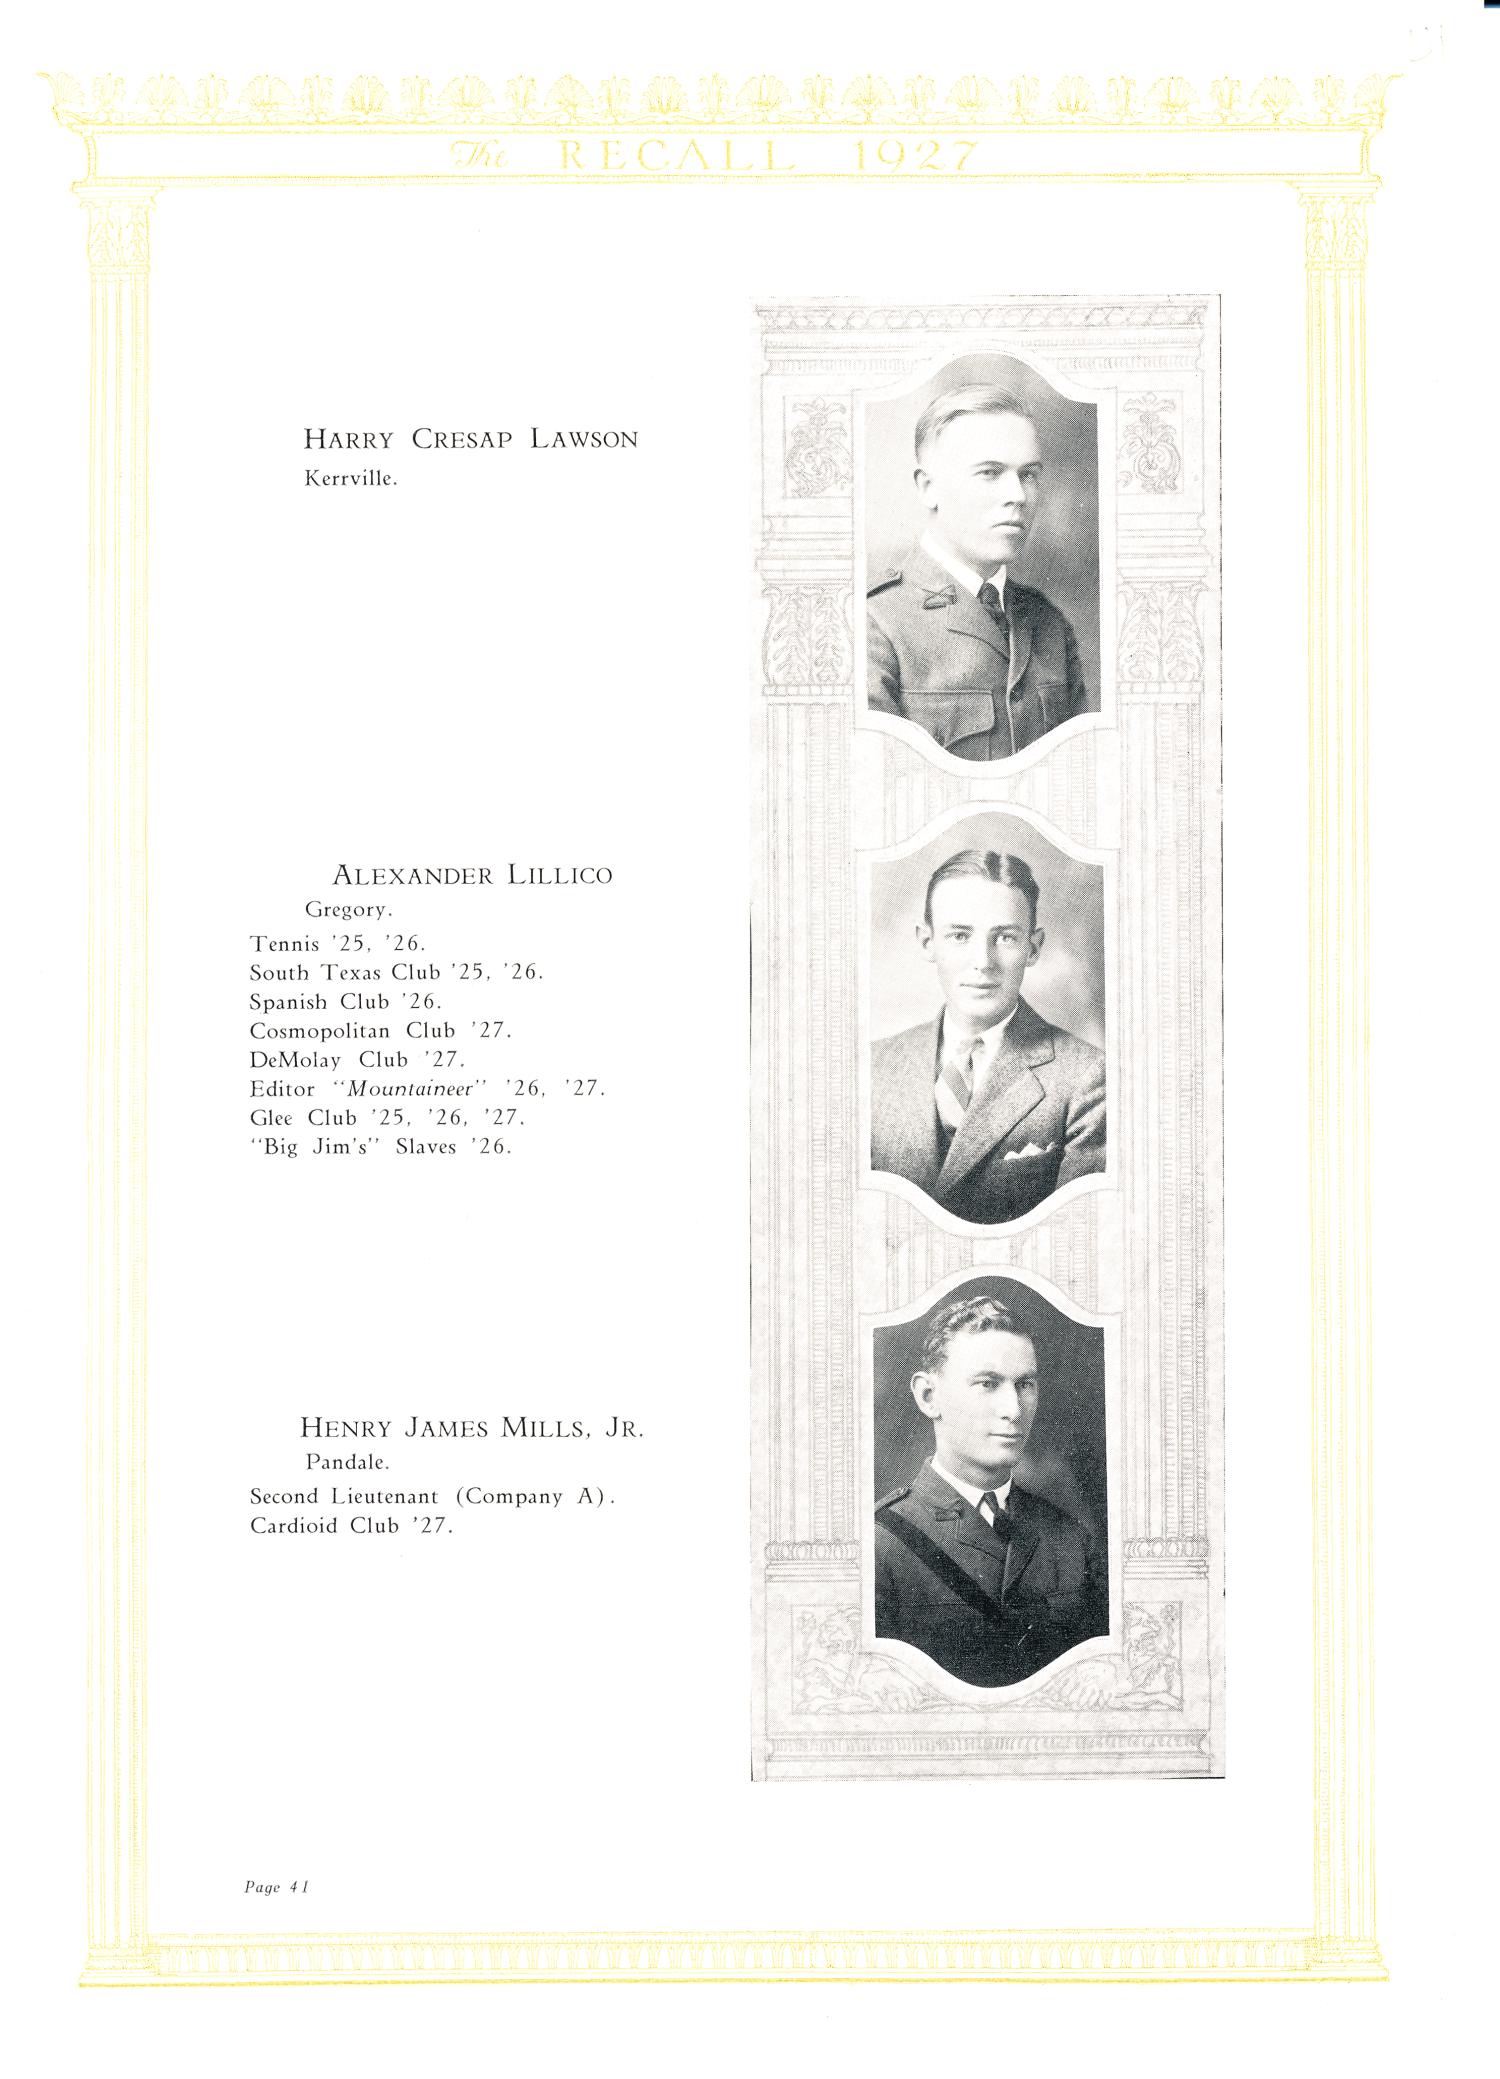 The Recall, Yearbook of Schreiner Institute, 1927
                                                
                                                    41
                                                